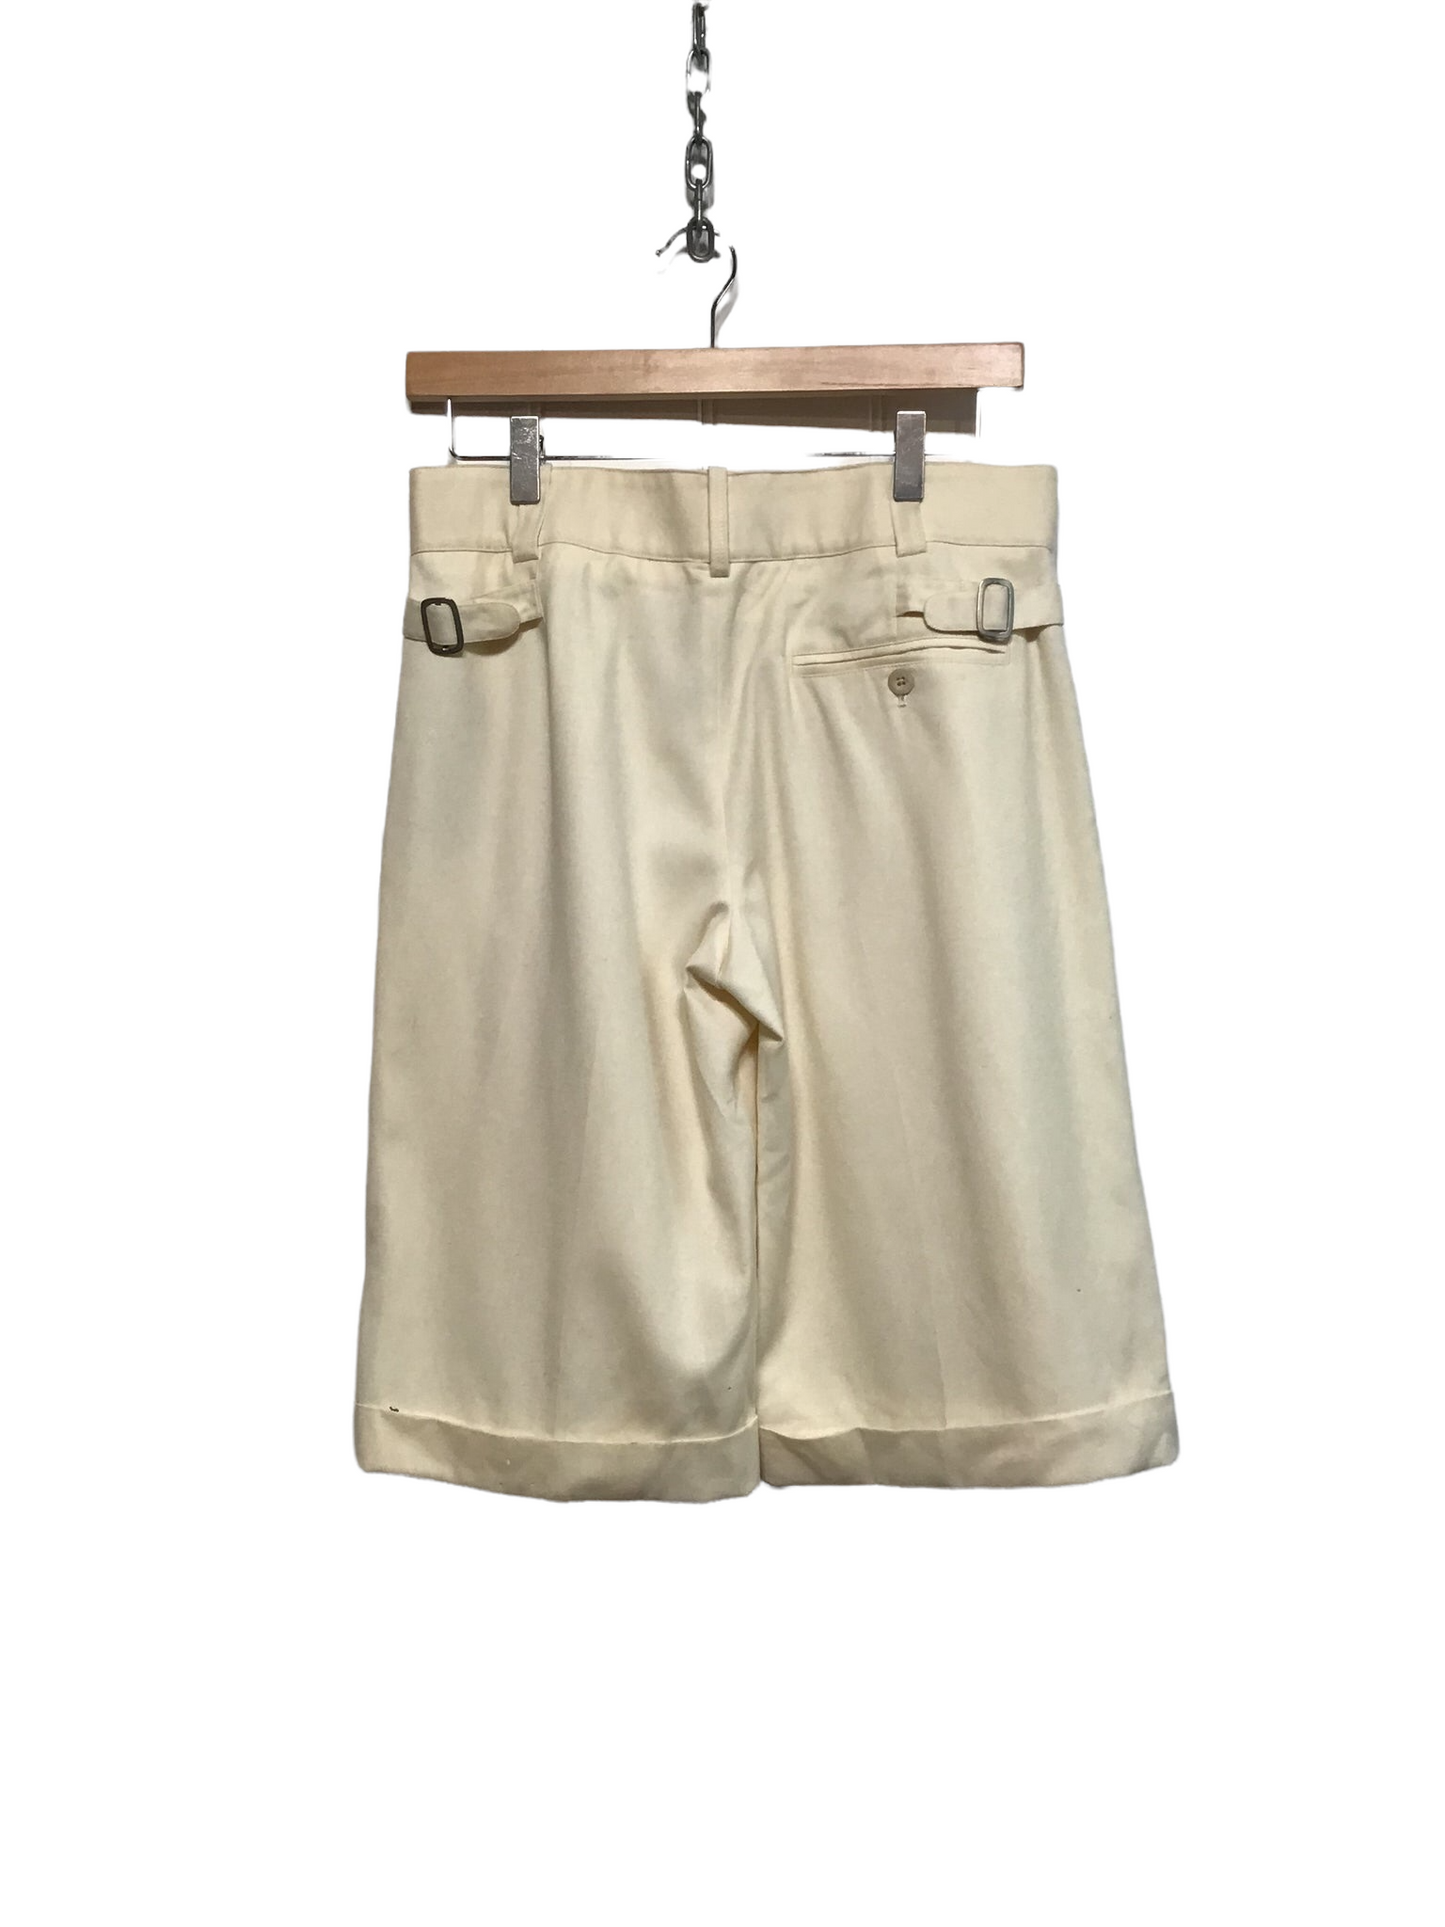 Ralph Lauren Cream Shorts (Size M/L)